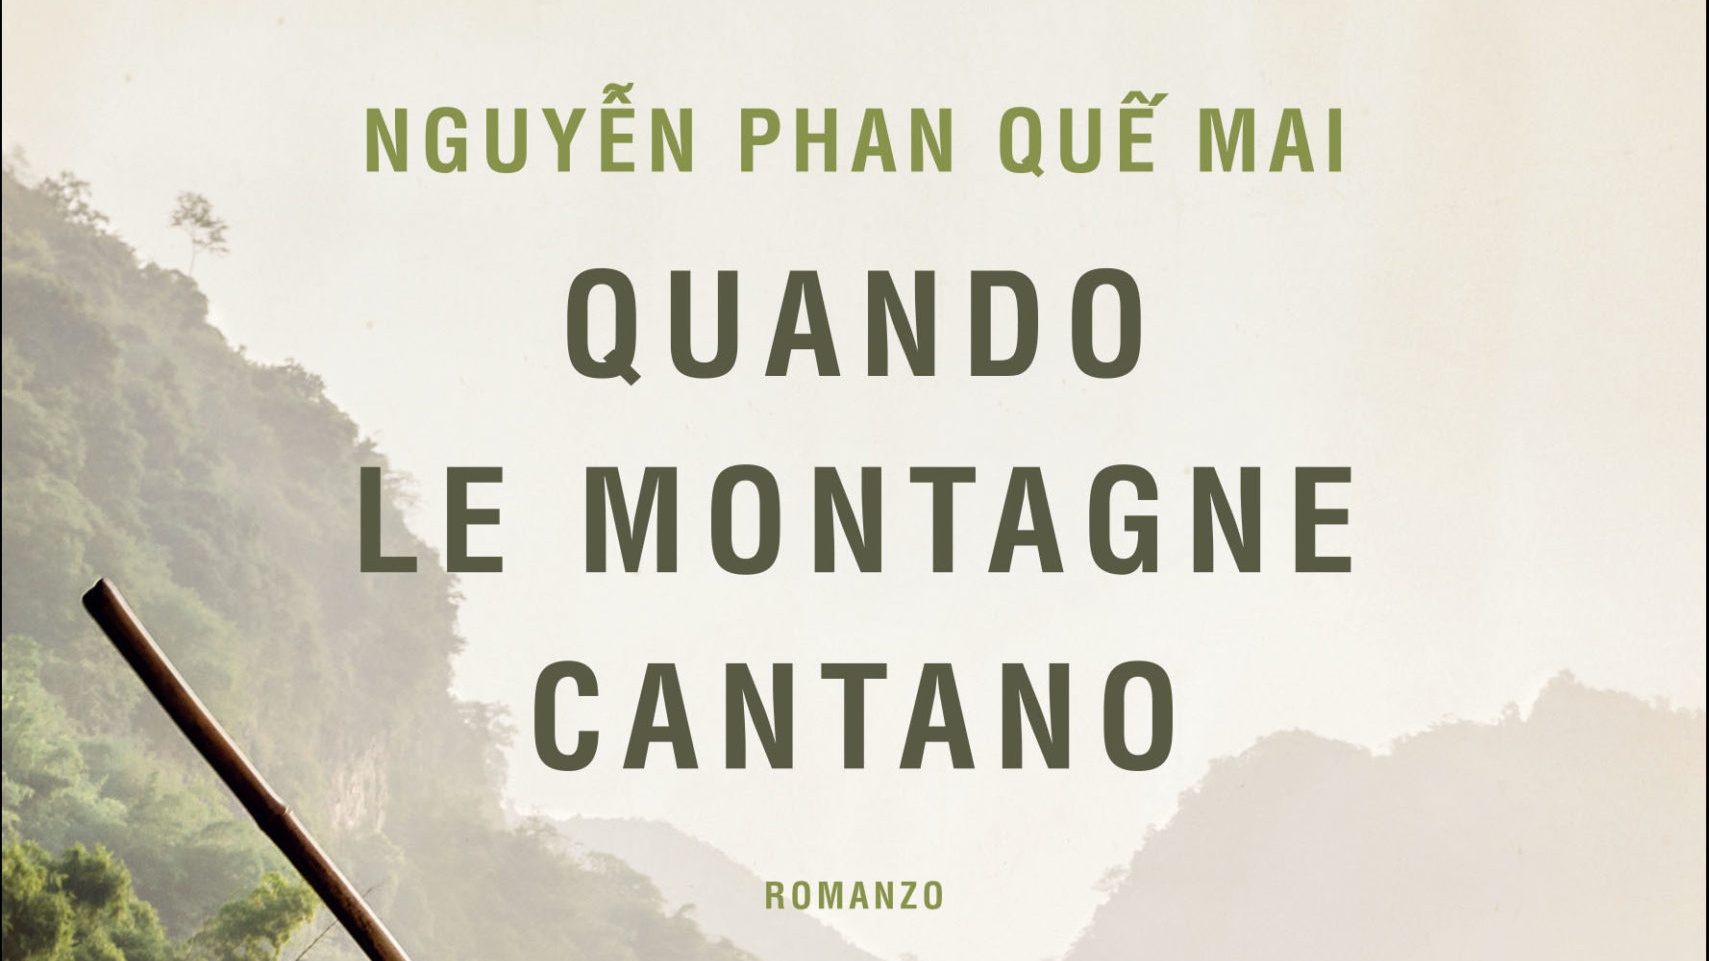 Quando le montagne cantano”, Nguyễn Phan Quế Mai